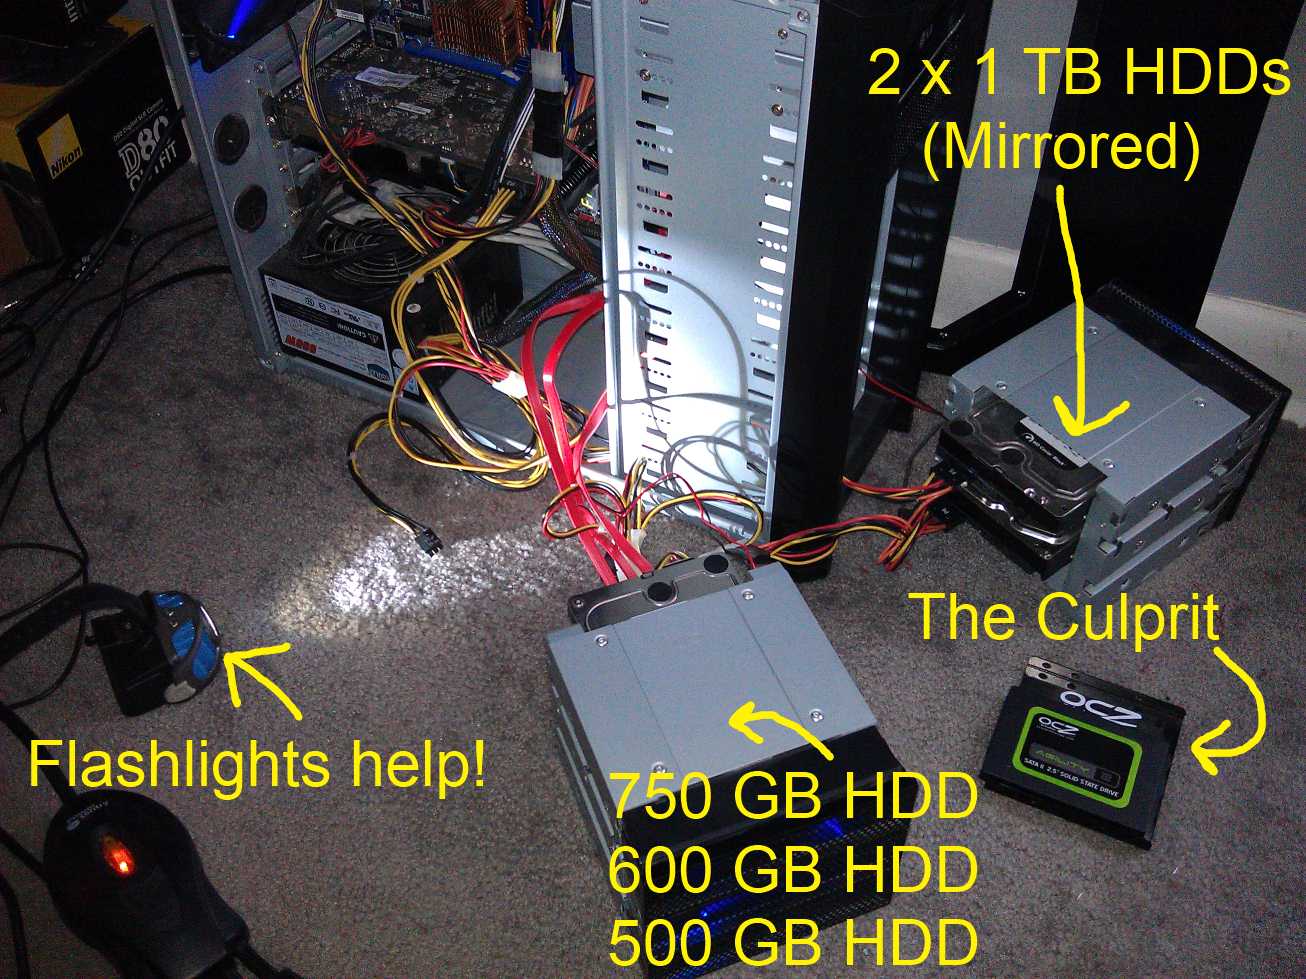 Hard drive death suck. OCZ is a jerk. Here's my set up.